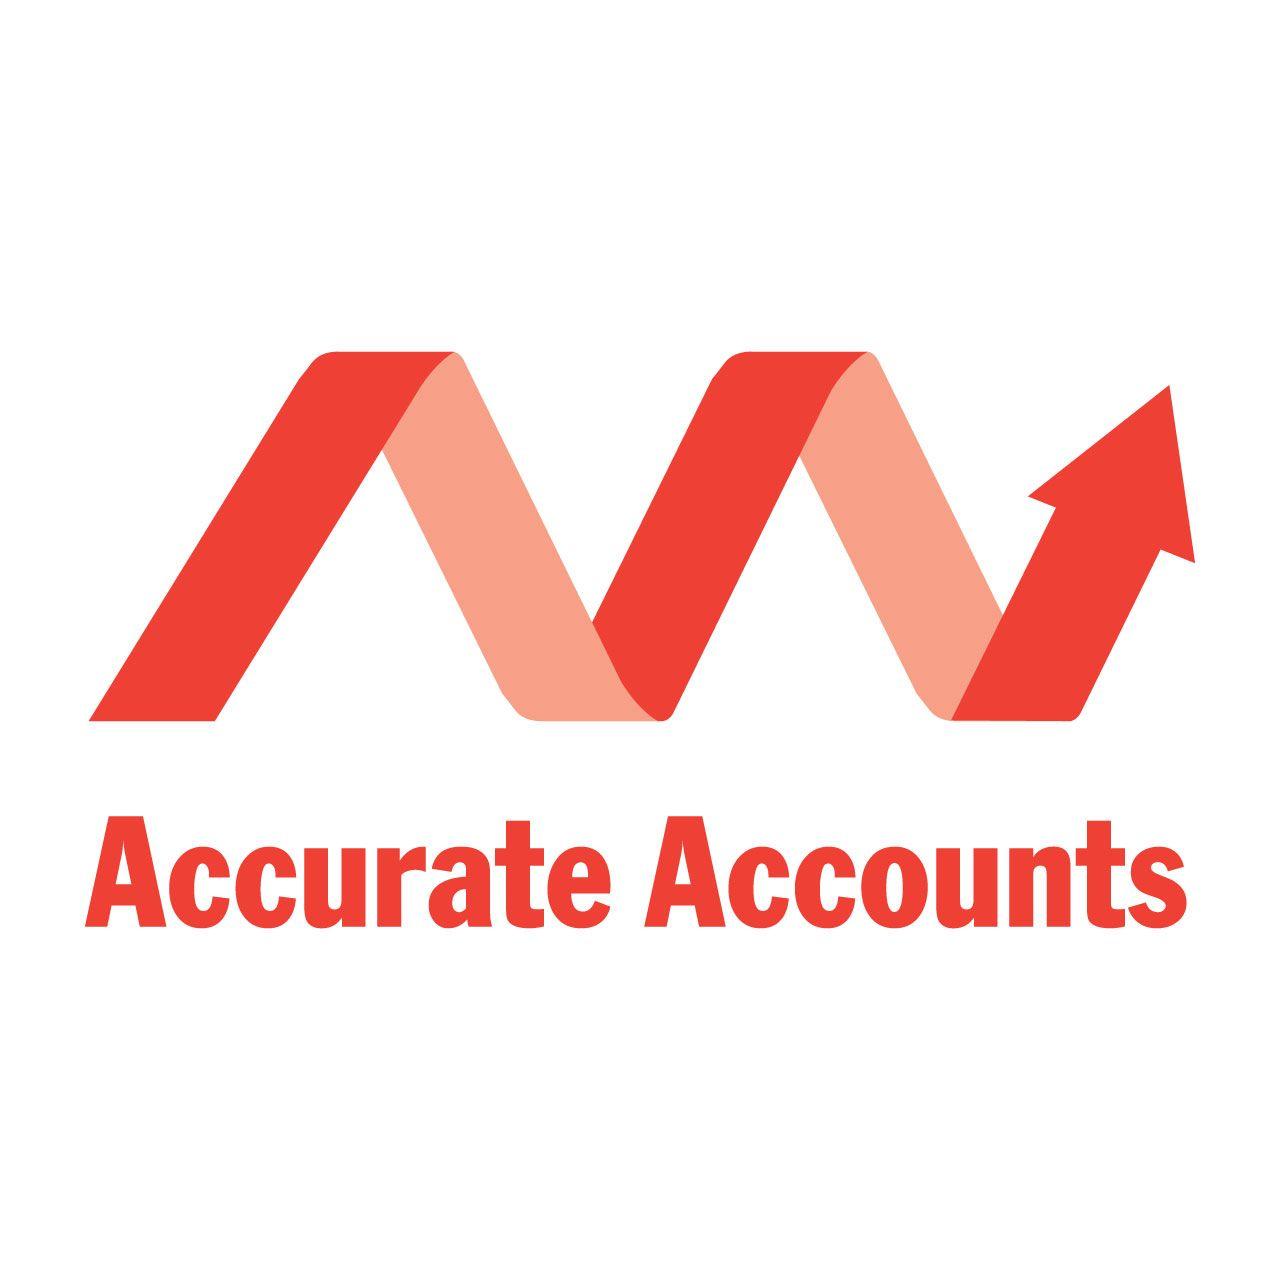 Accounts Logo - Accurate Accounts Logo